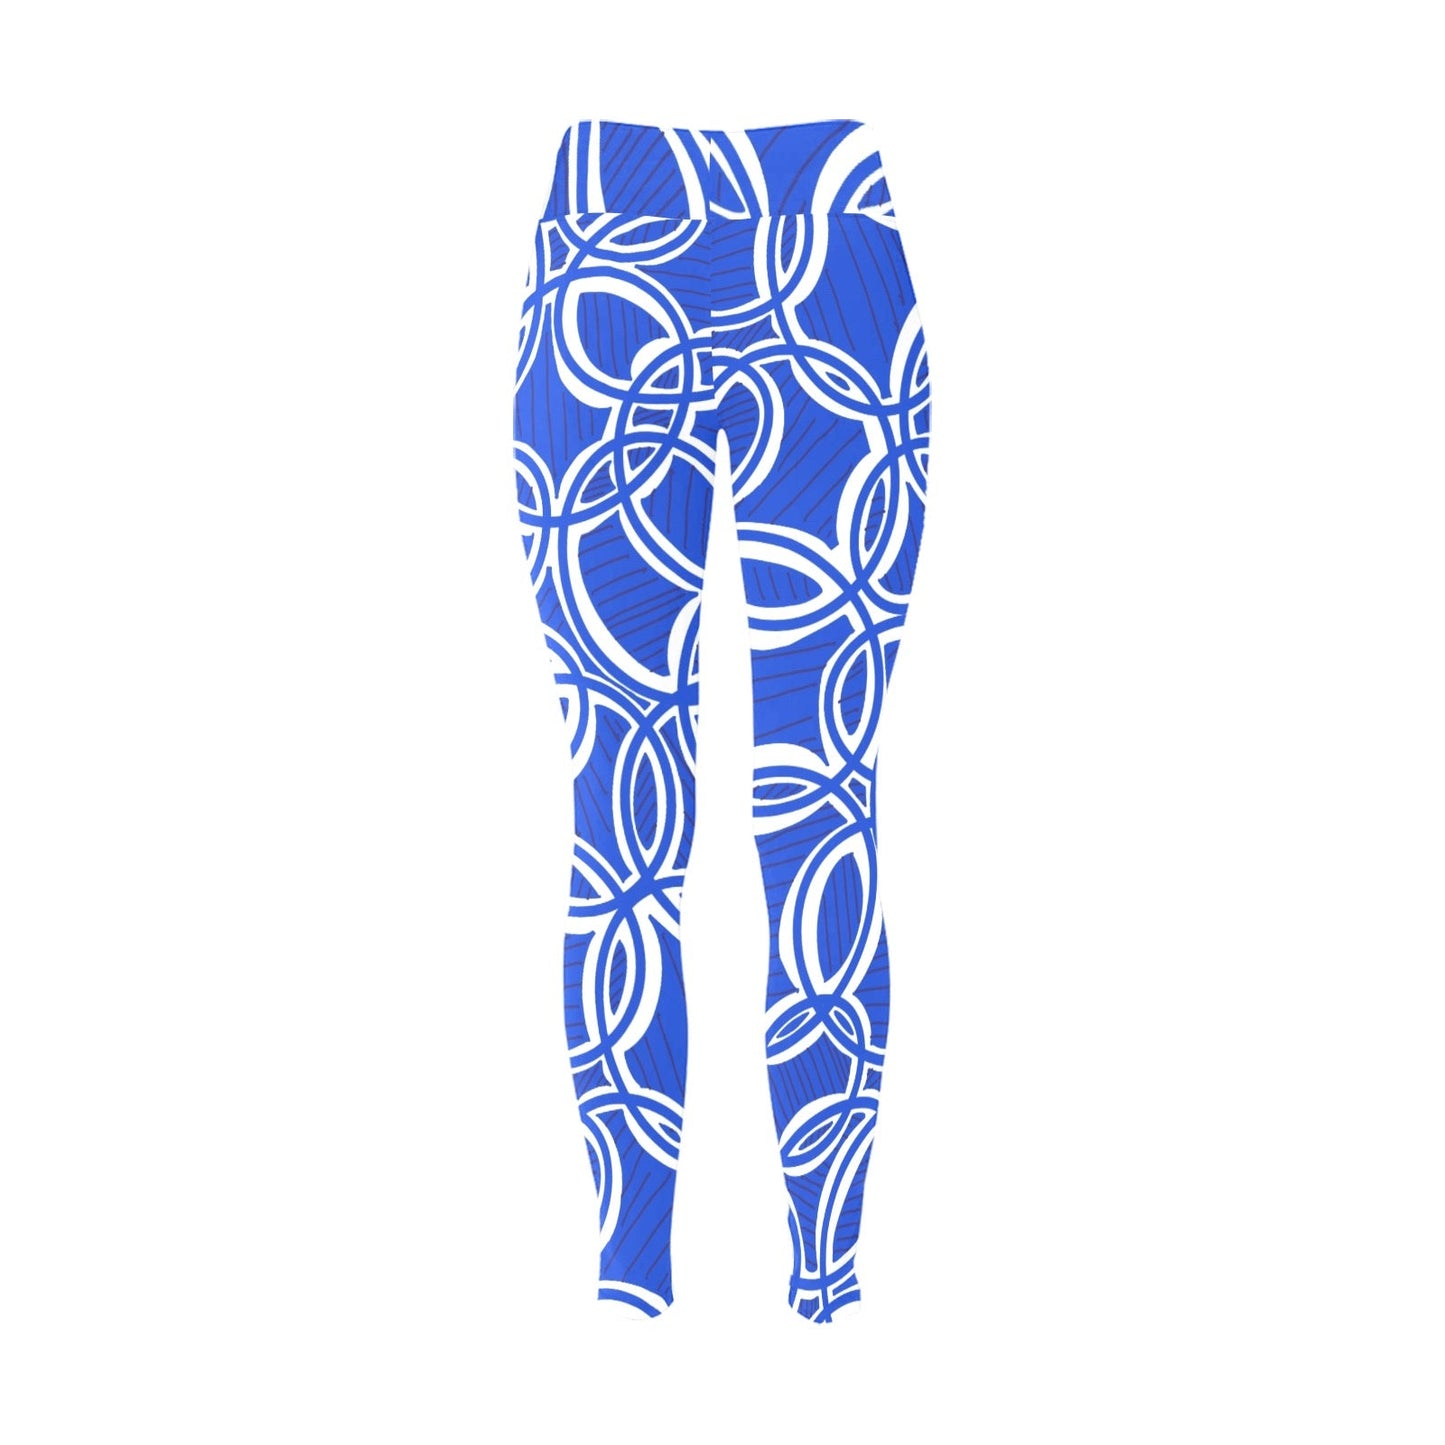 Blue Geometric Workout Leggings. Houston Collection. Design hand-painted by the Designer Maria Alejandra Echenique